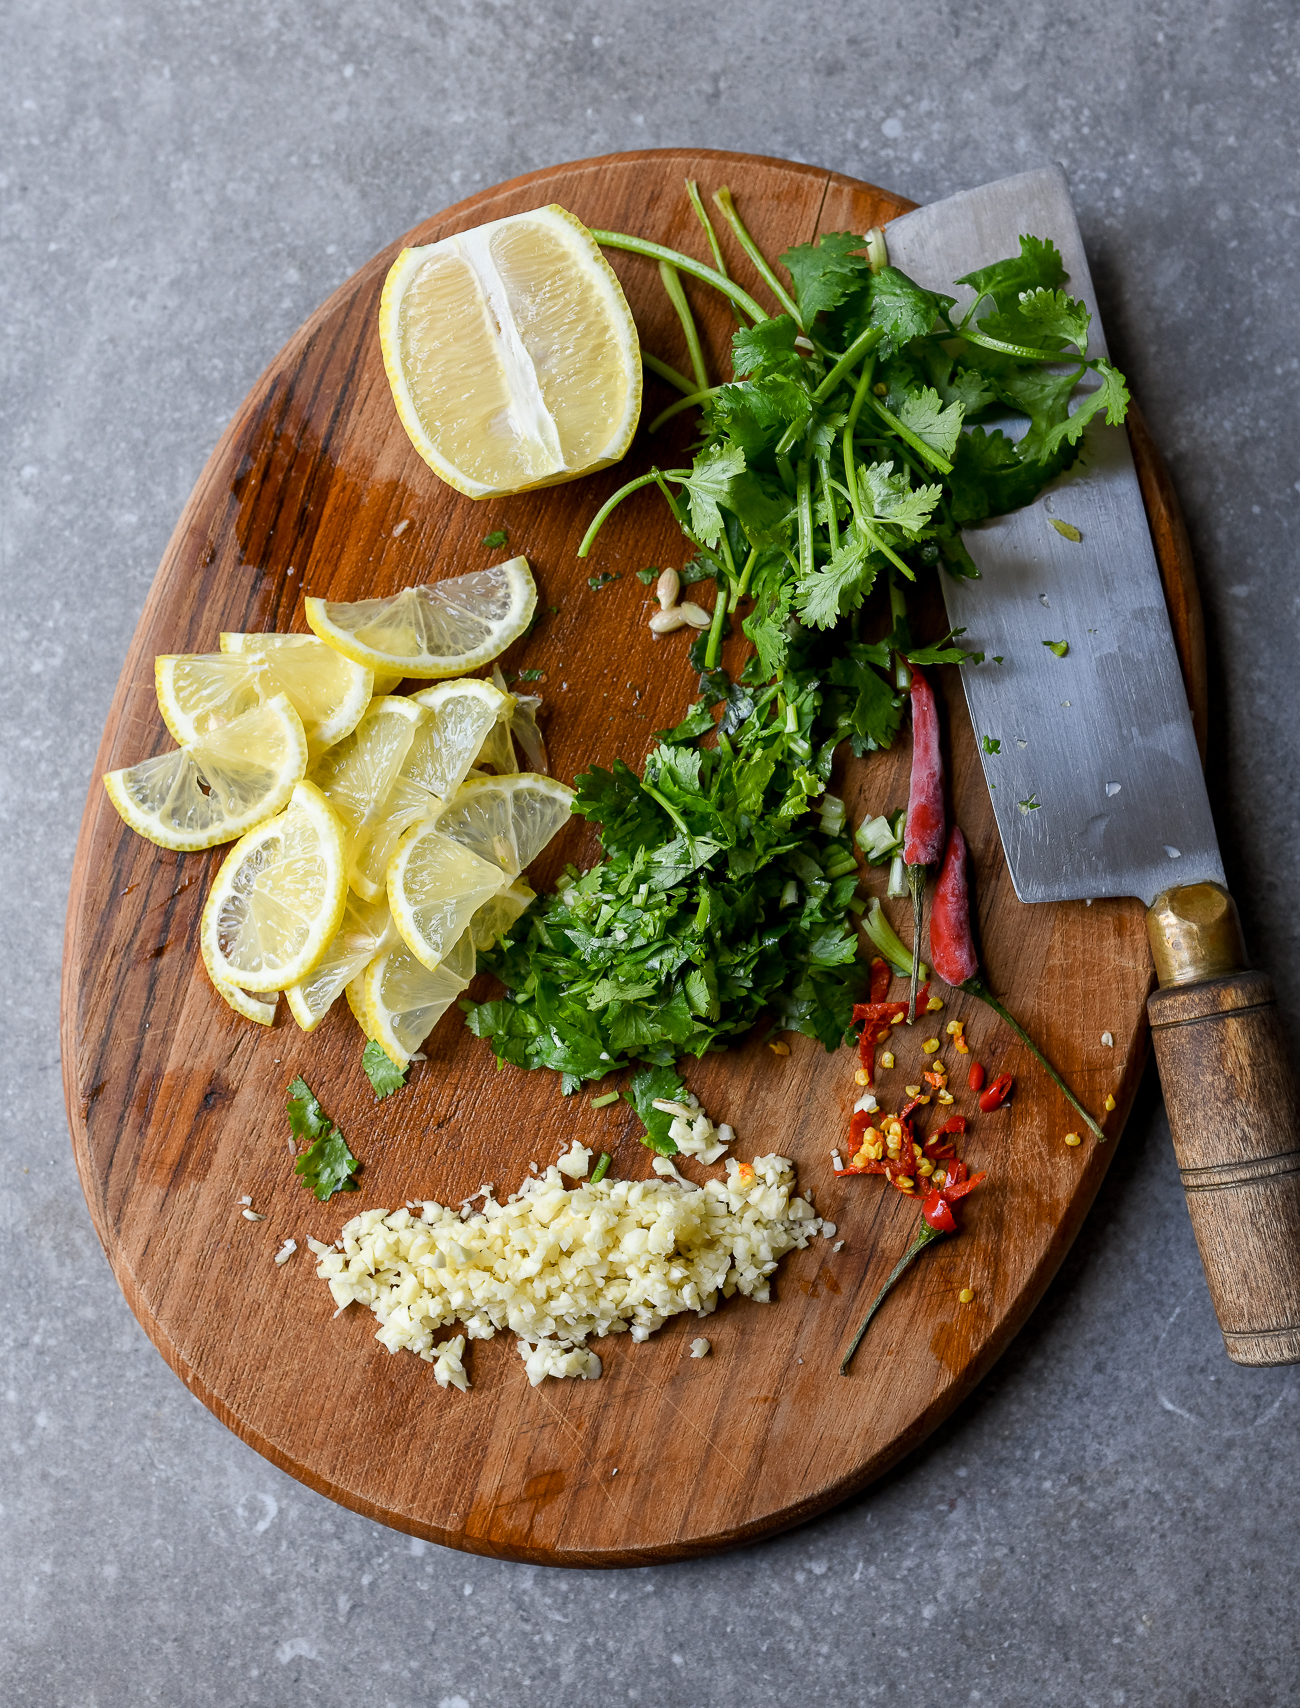 Cutting board with garlic, lemon slices, cilantro, and chili